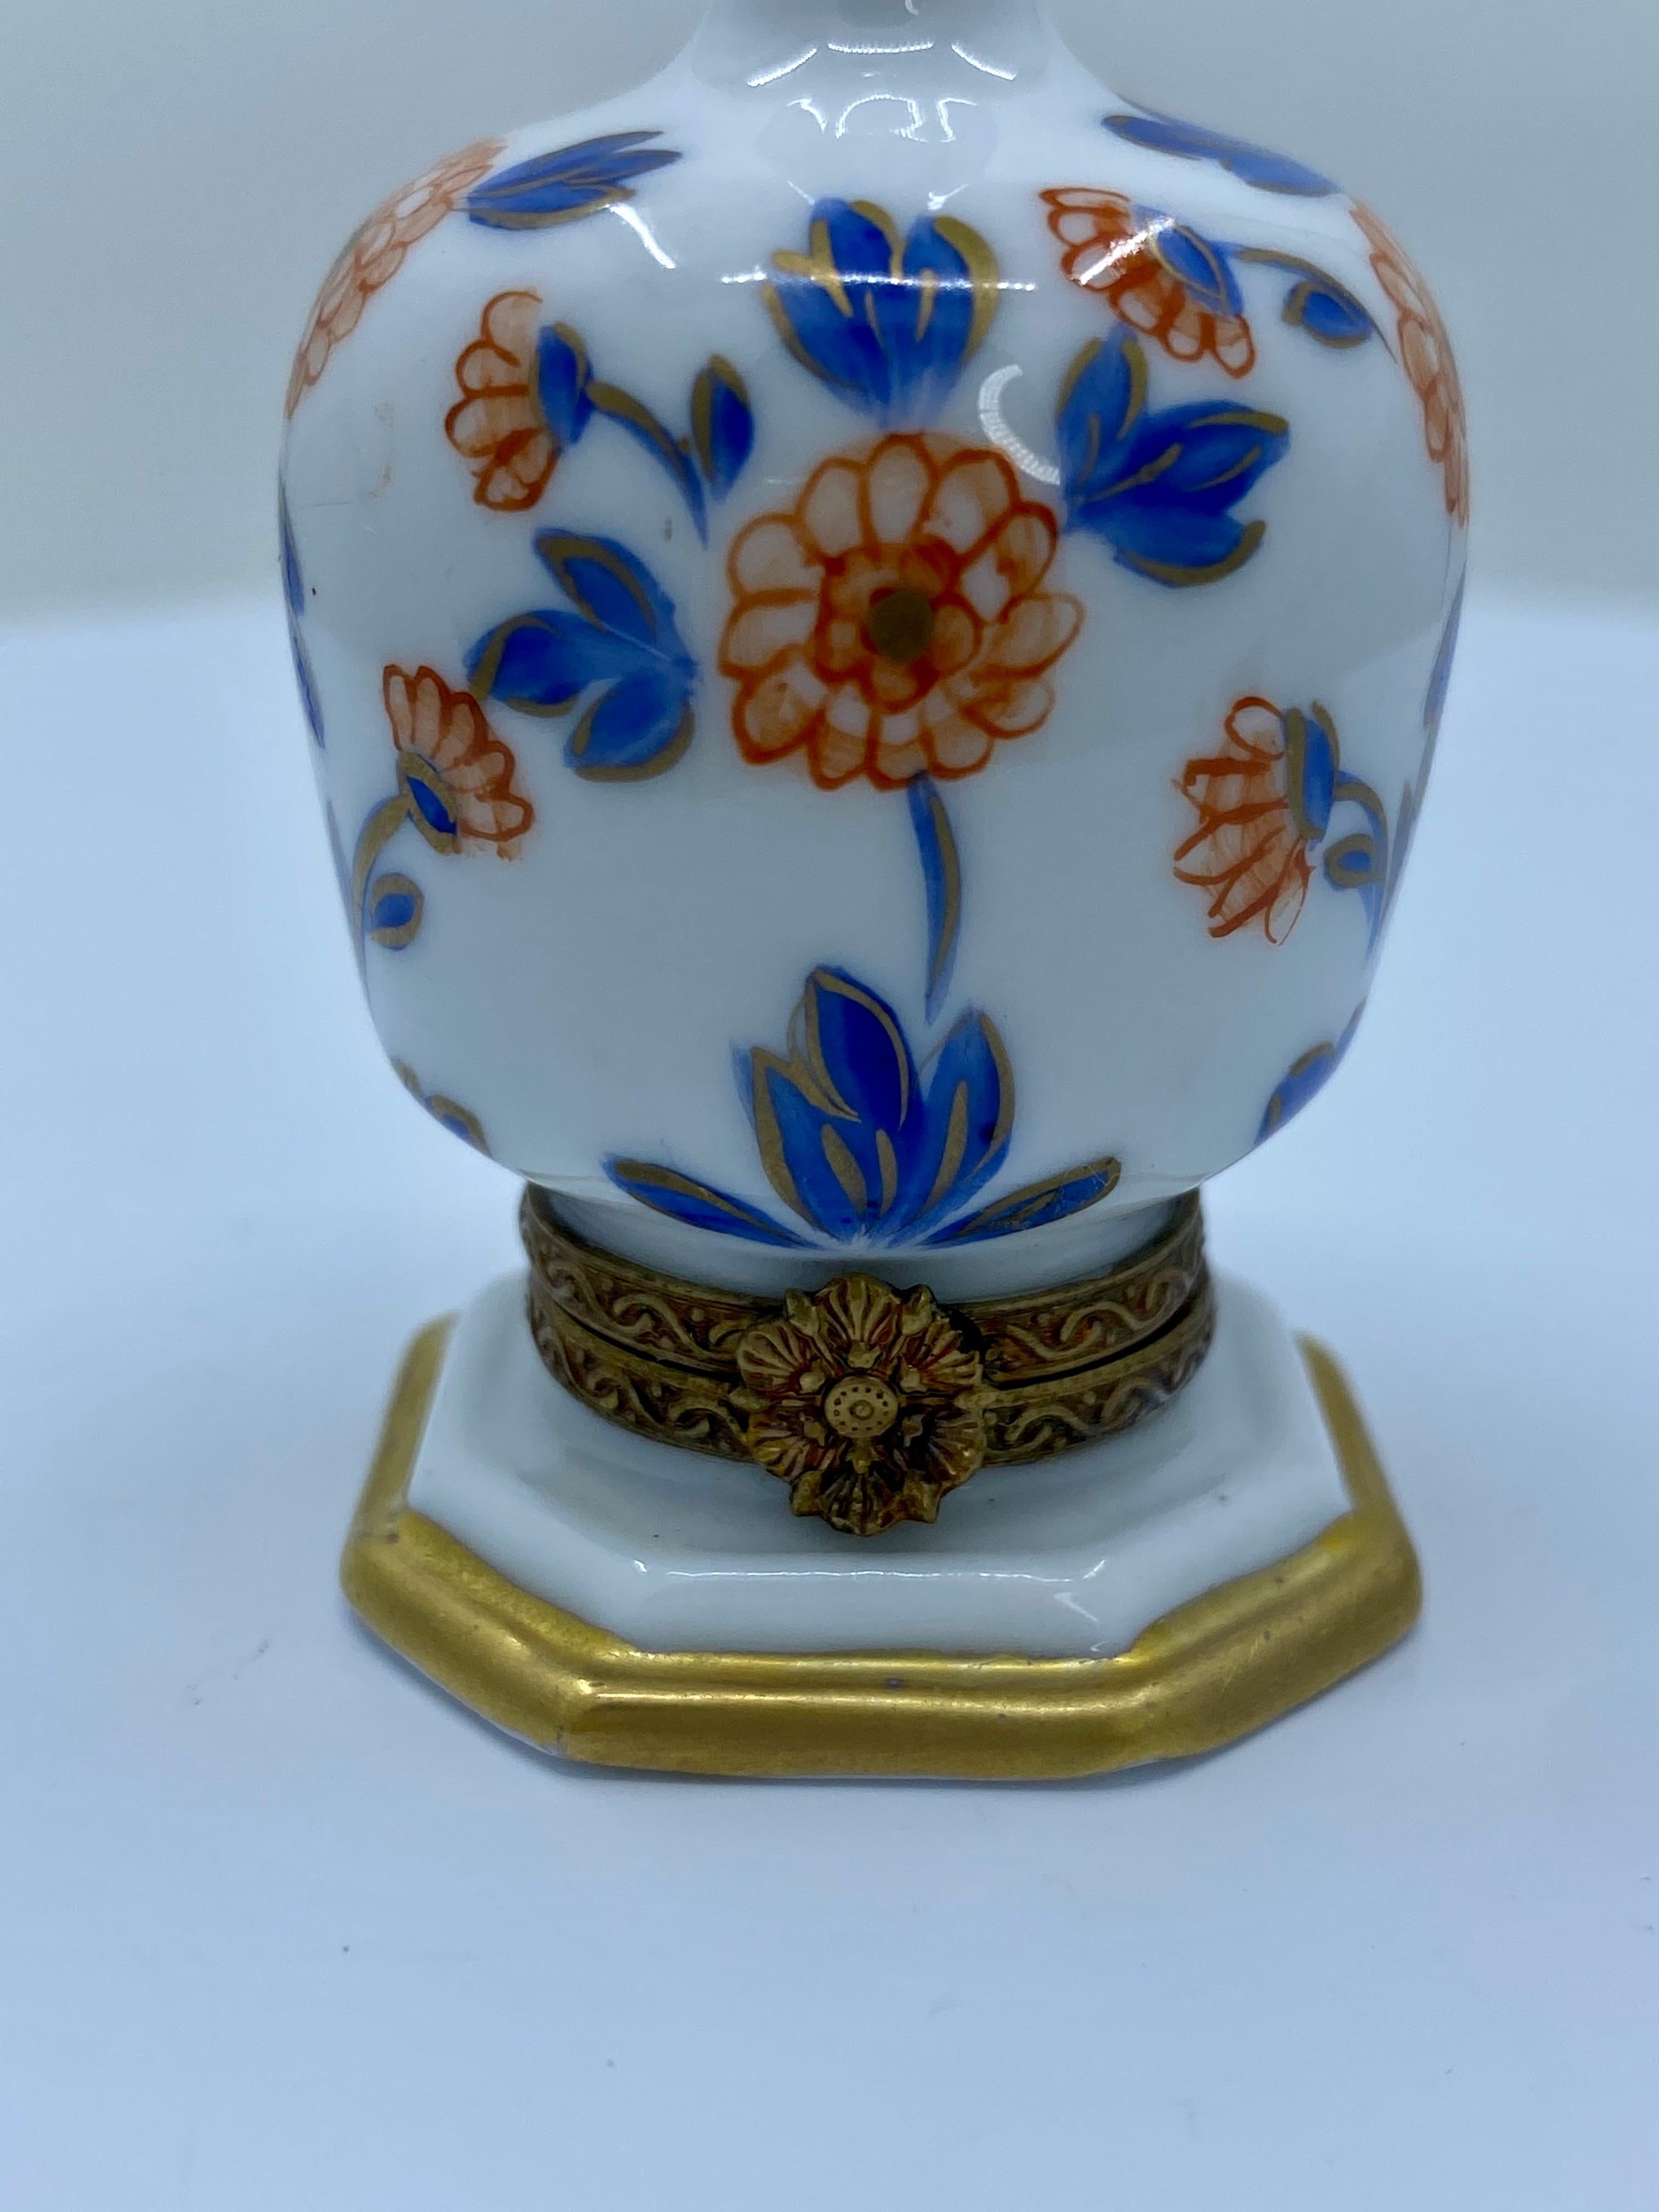 Hand-Painted Unique Limoges France Hand Painted Porcelain Vase Trinket Box with Floral Motif For Sale